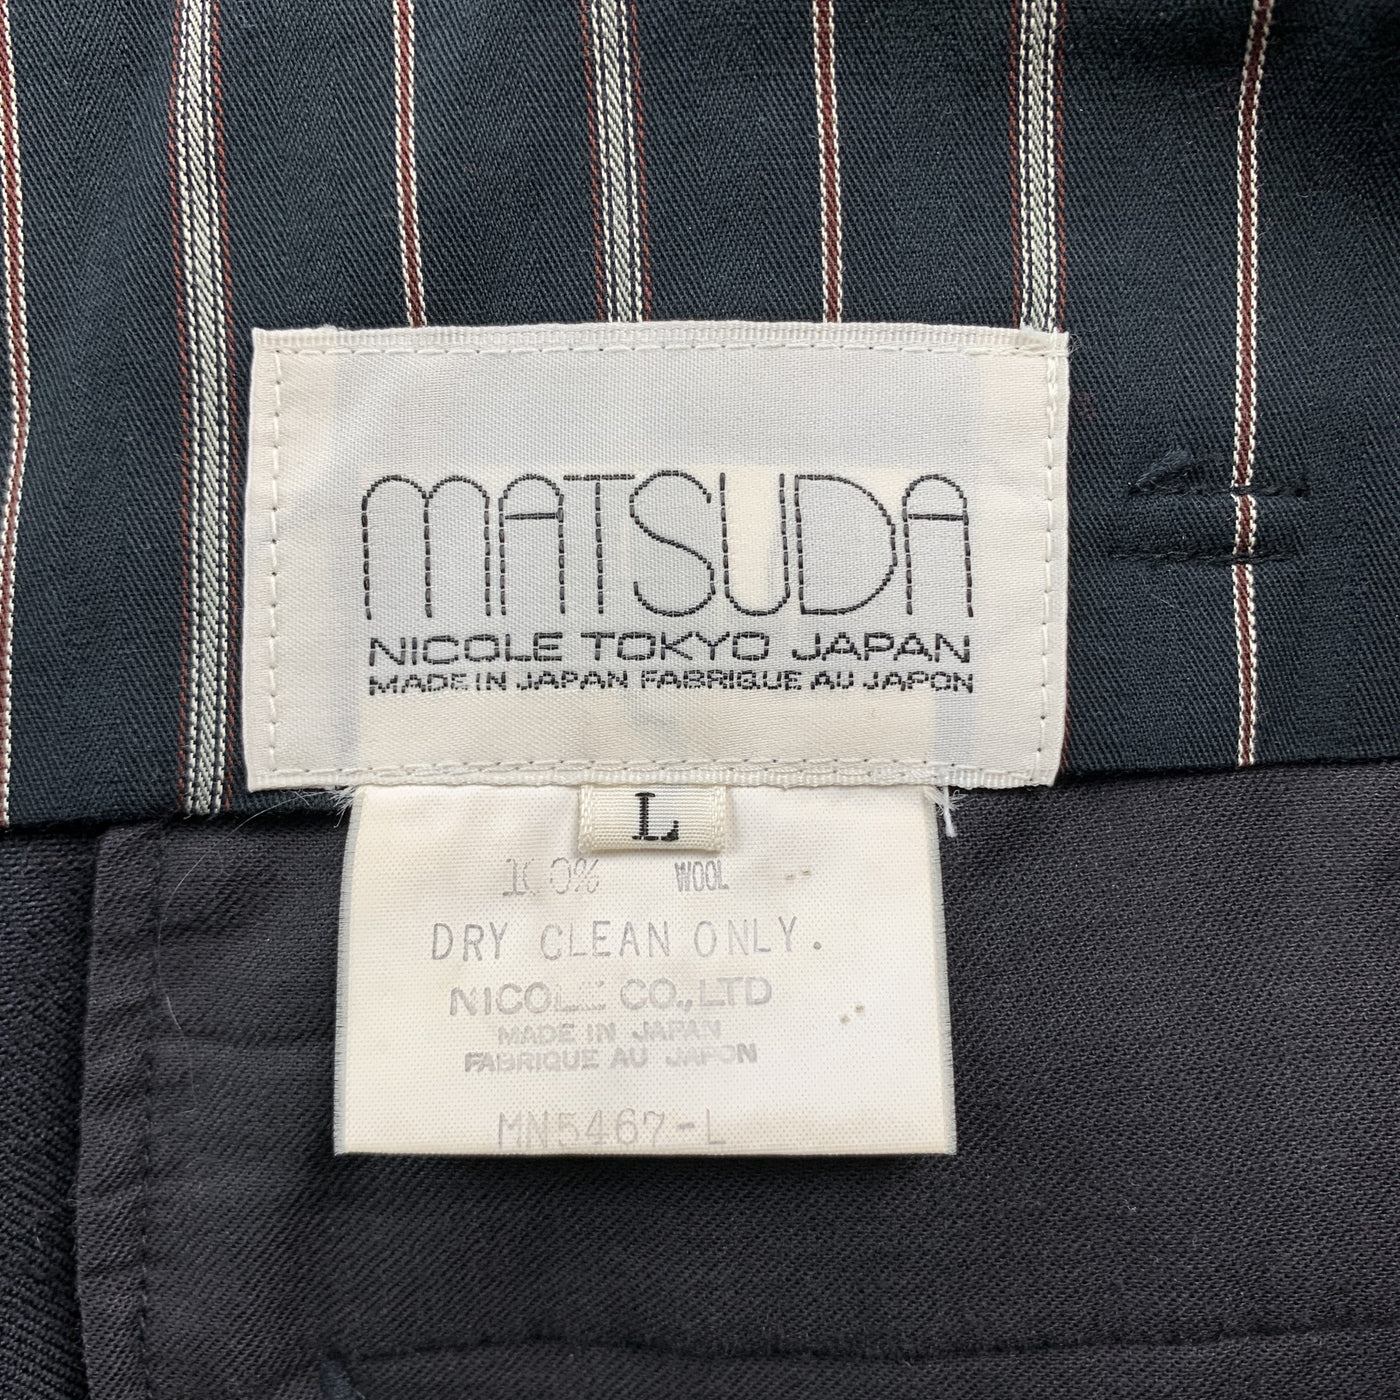 Vintage MATSUDA Size L Charcoal Window Pane Wool Pleated Dress Pants